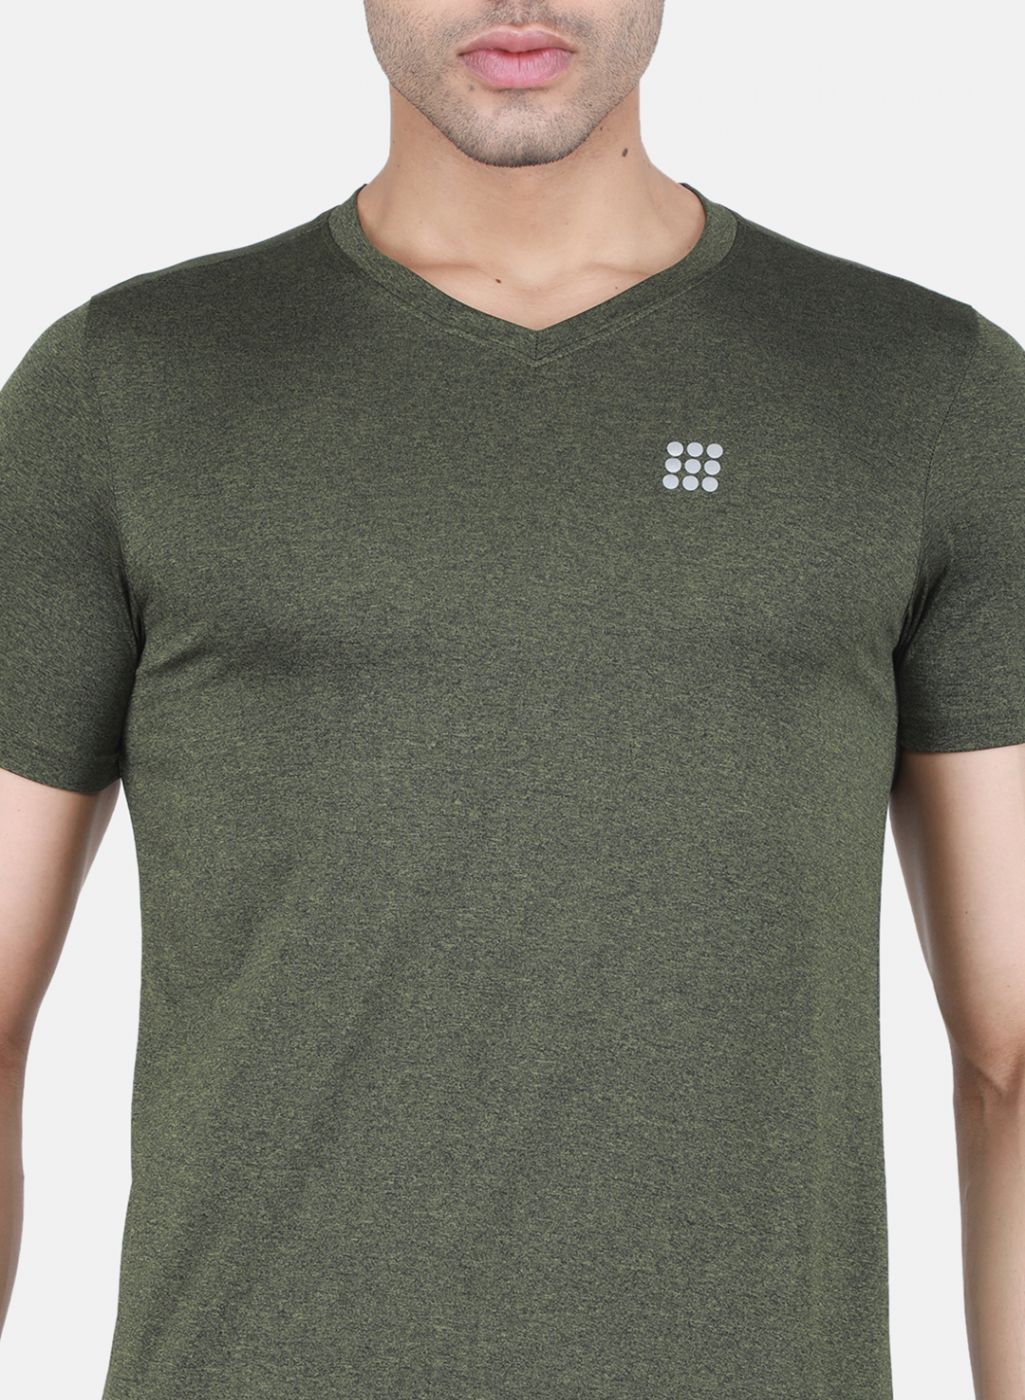 Rock-it Men Olive Solid T-Shirt